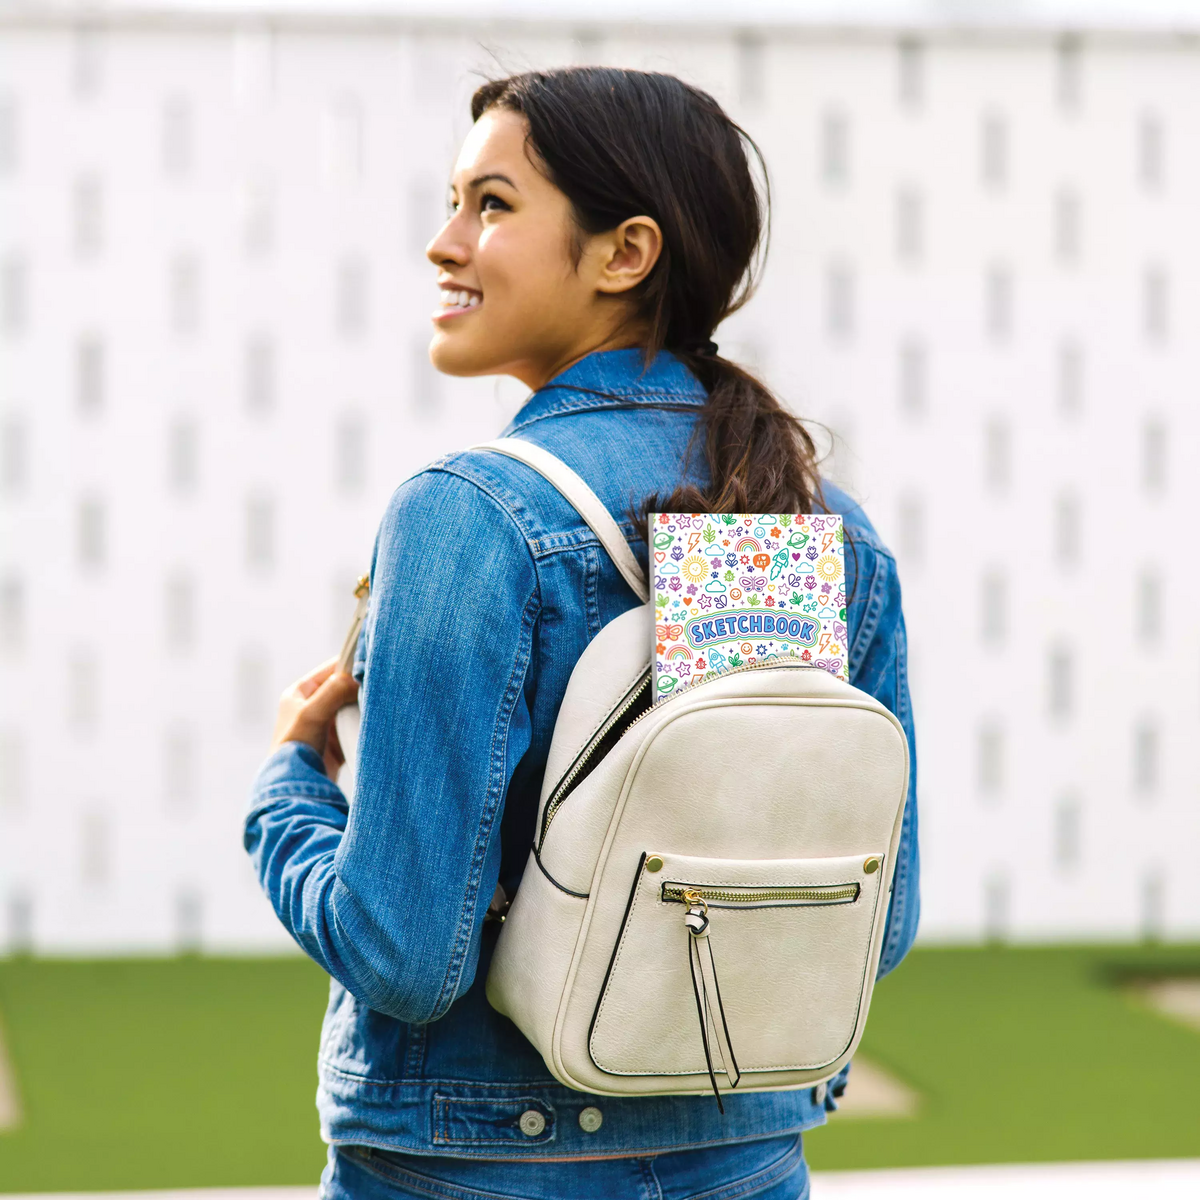 Girl wearing backpack with Colorful Doodles sketchbook